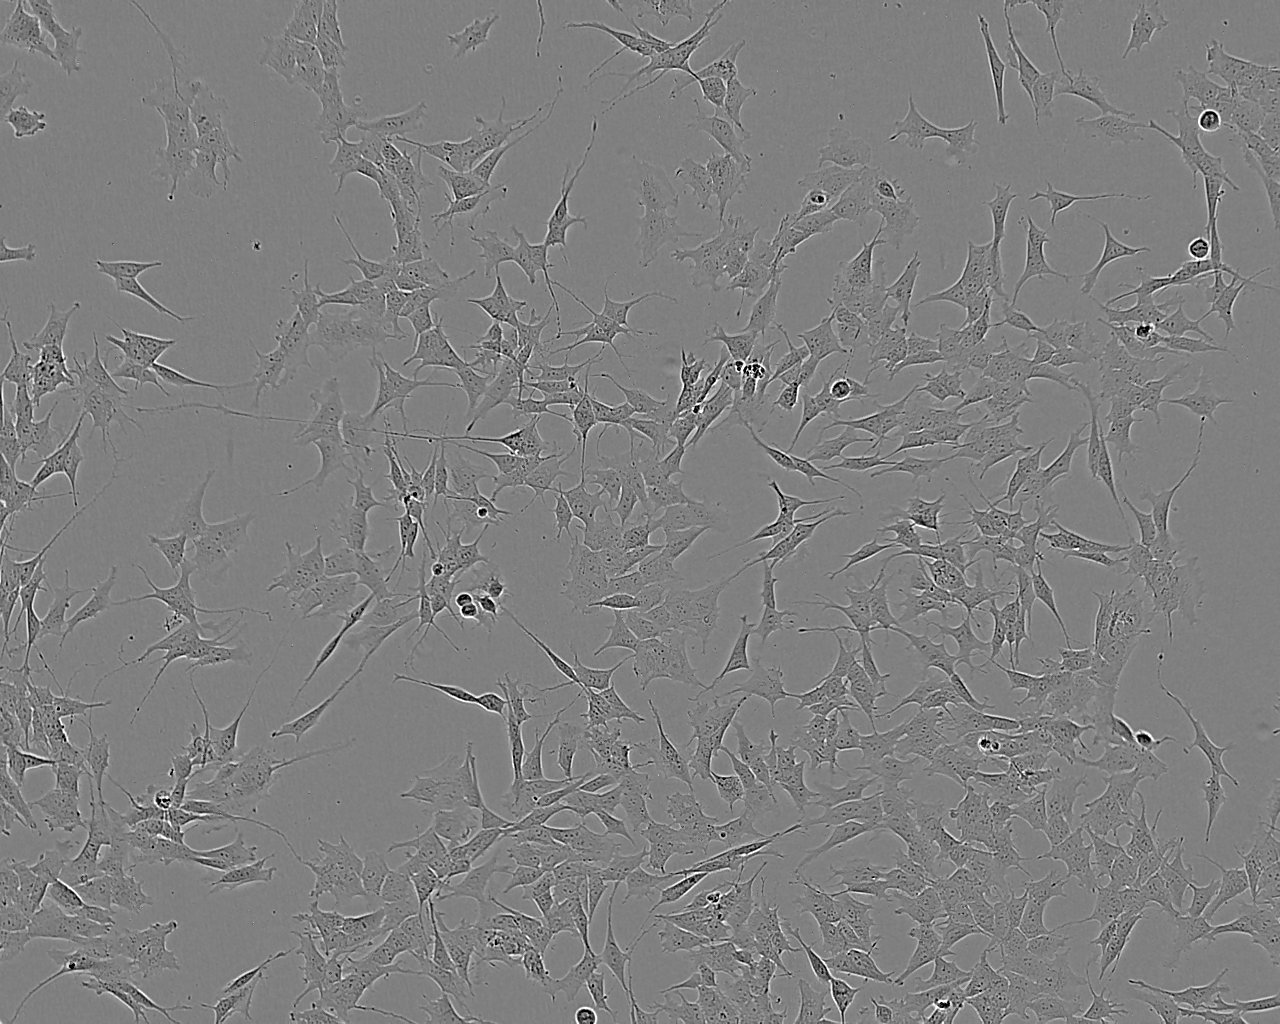 CCD-841CoN epithelioid cells人正常结肠上皮细胞系